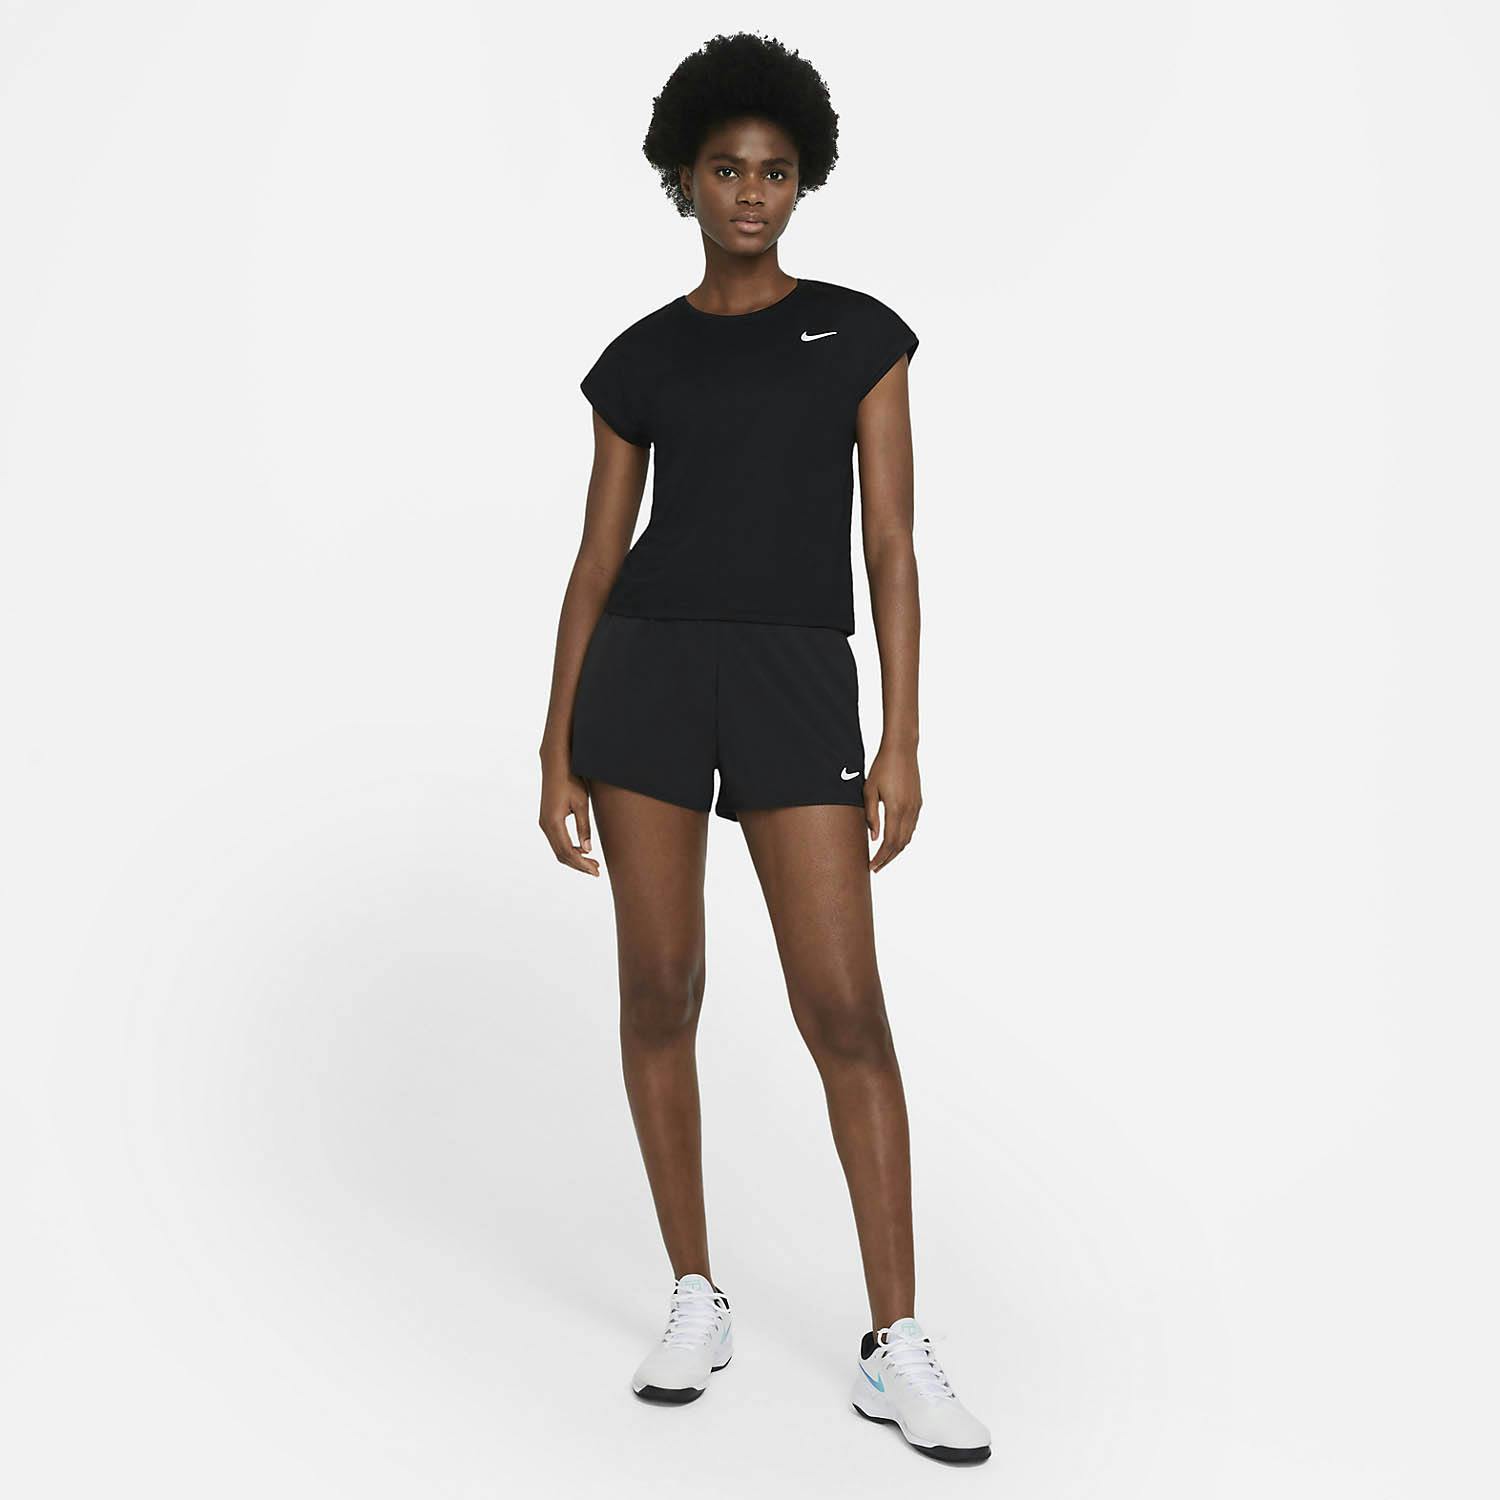 Nike Women's Court Dri-FIT Victory Tennis Shirt